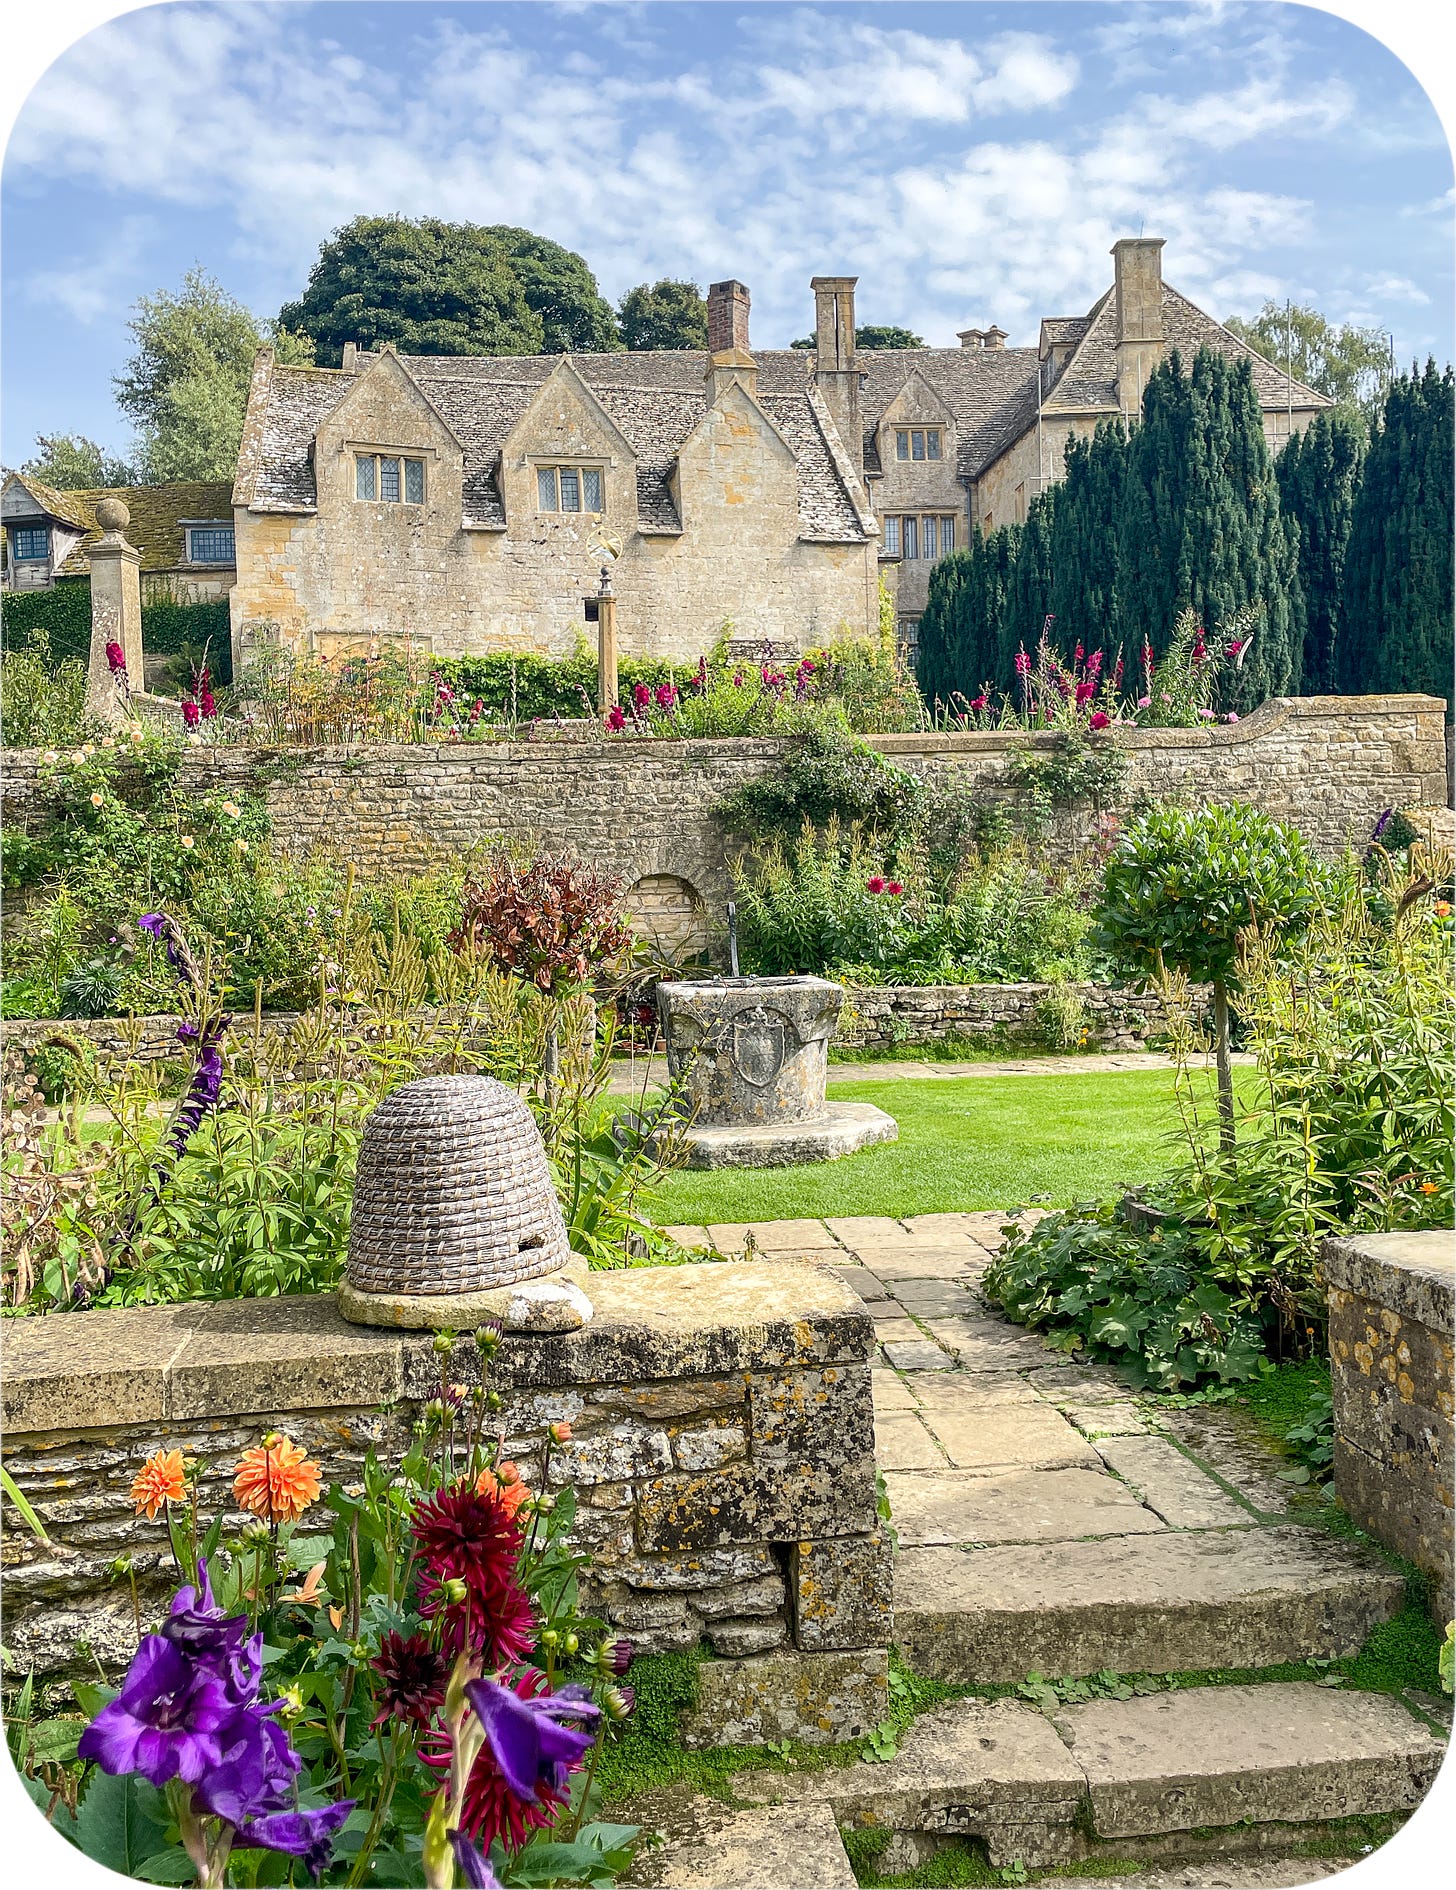 The garden at Snowshill Manor